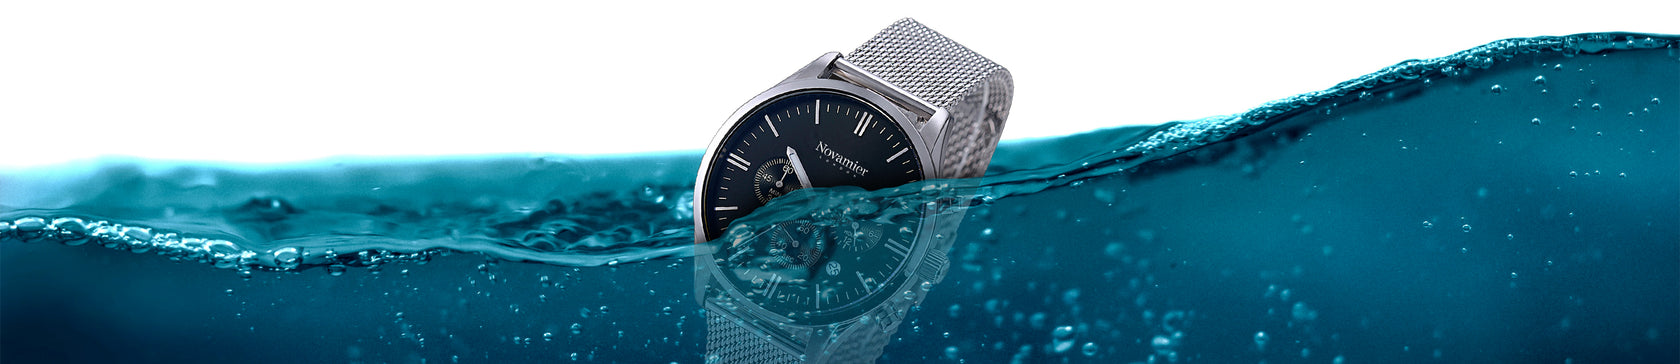 silver watch by Novamier London underwater